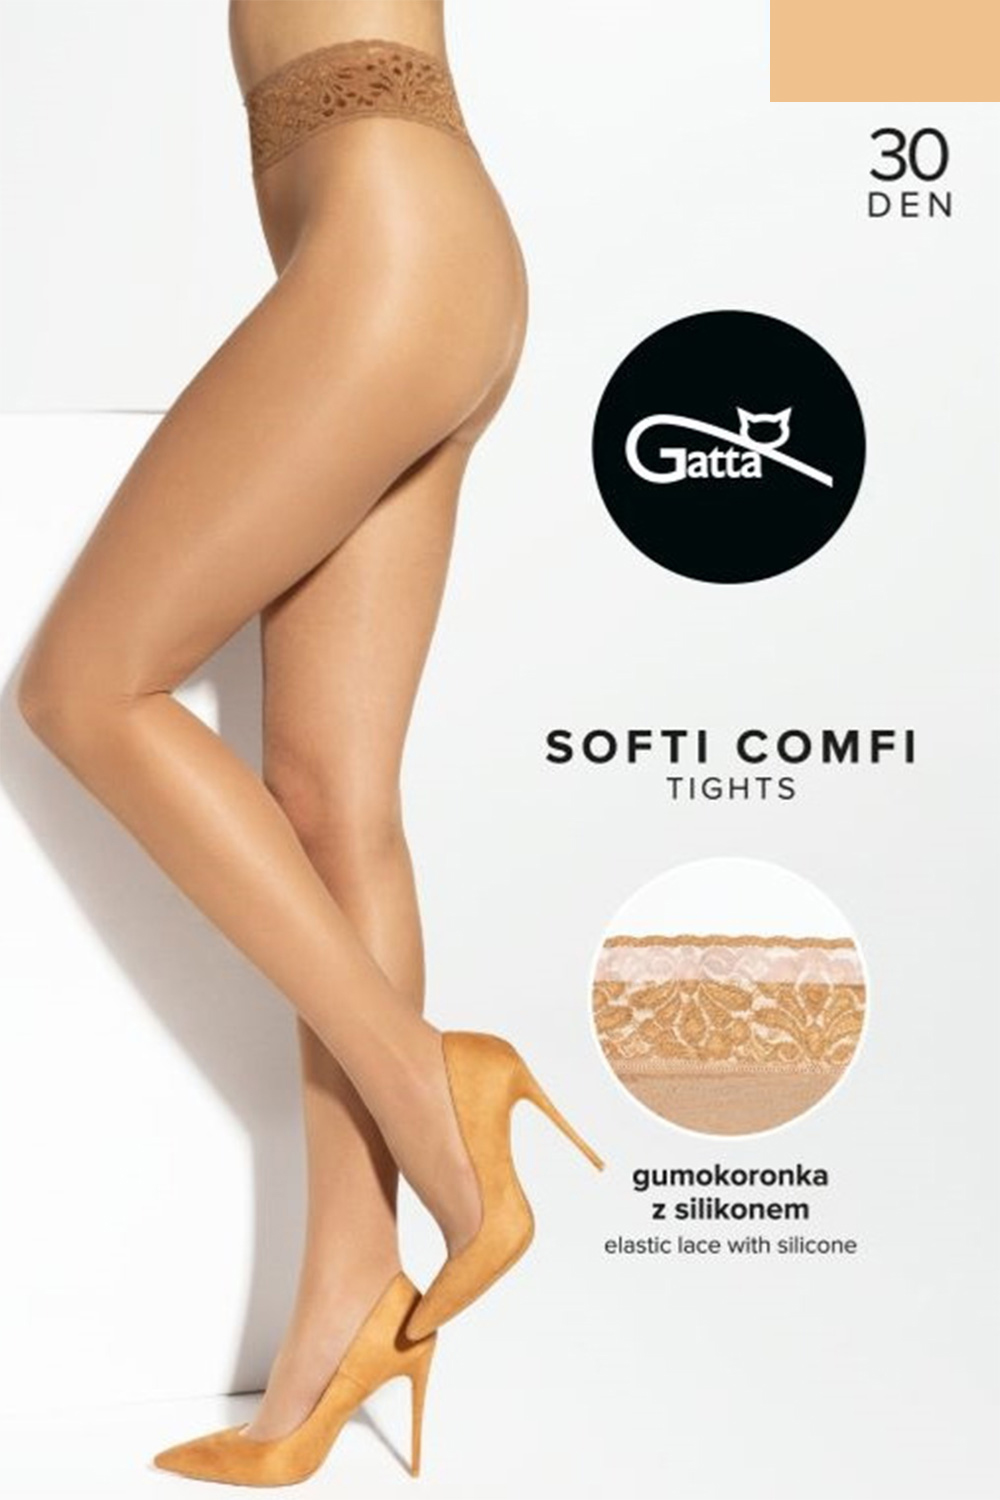 Gatta Softi-Comfi 30 DEN - golden